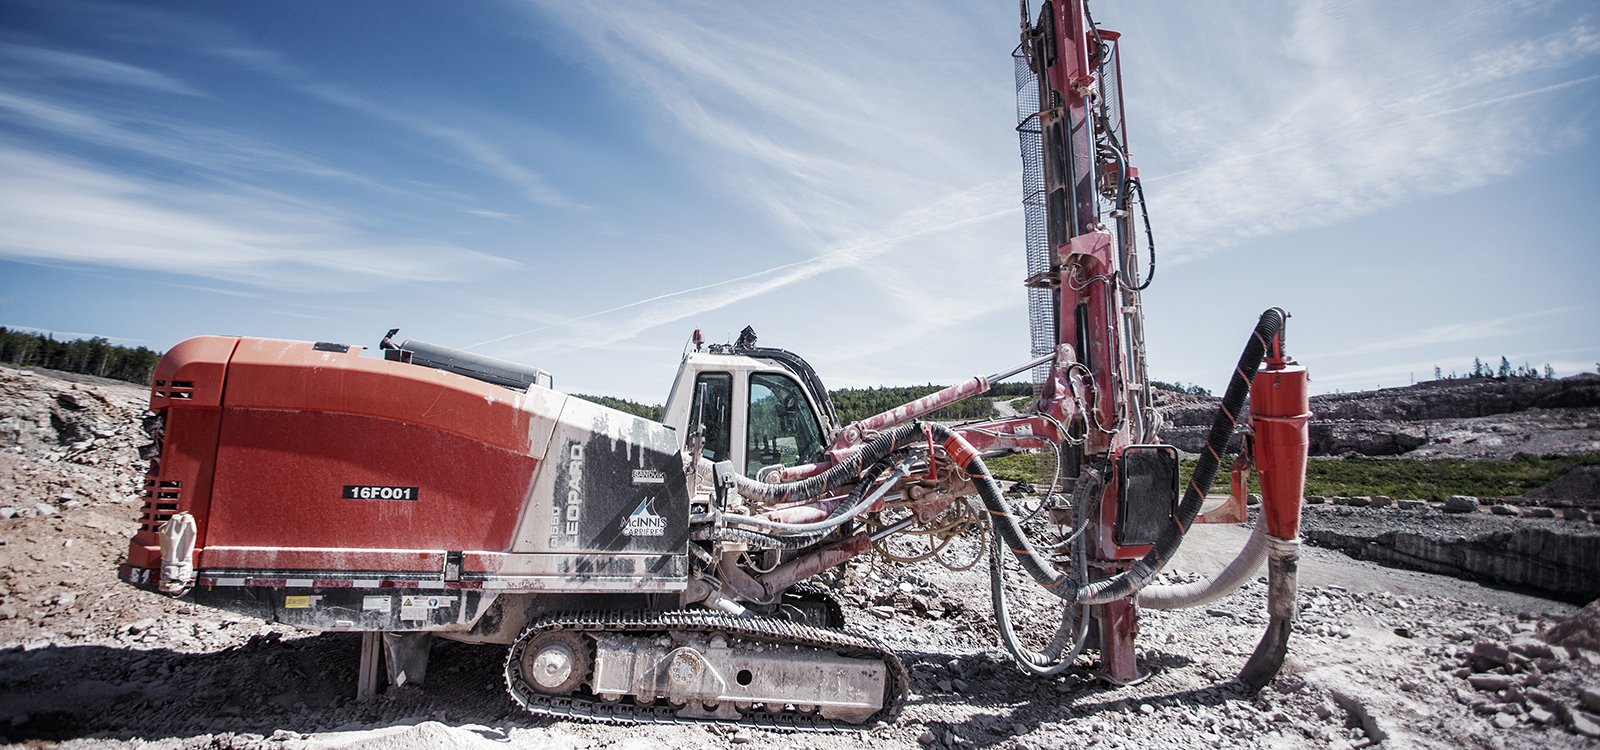 Leopard DI550潜孔钻机有助于McInnis
在地形复杂的矿区保持高产。